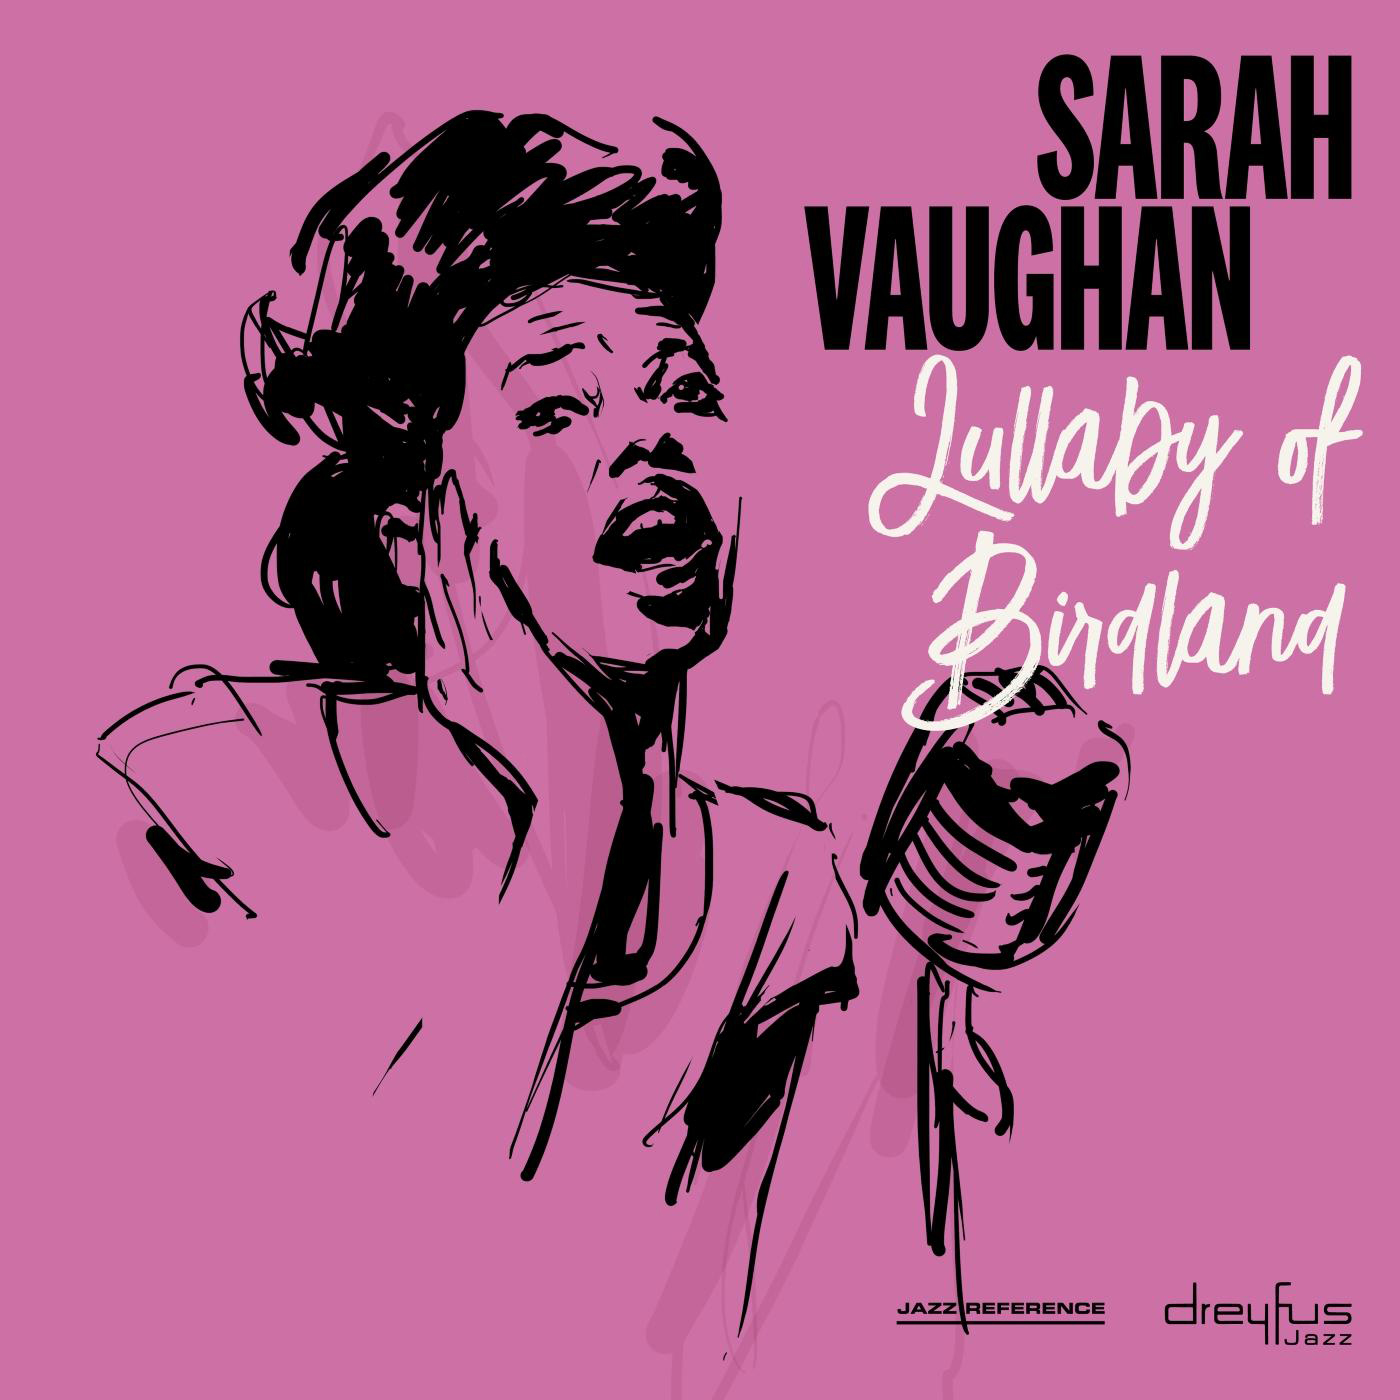 Sarah - - (Vinyl) of Vaughan Birdland Lullaby